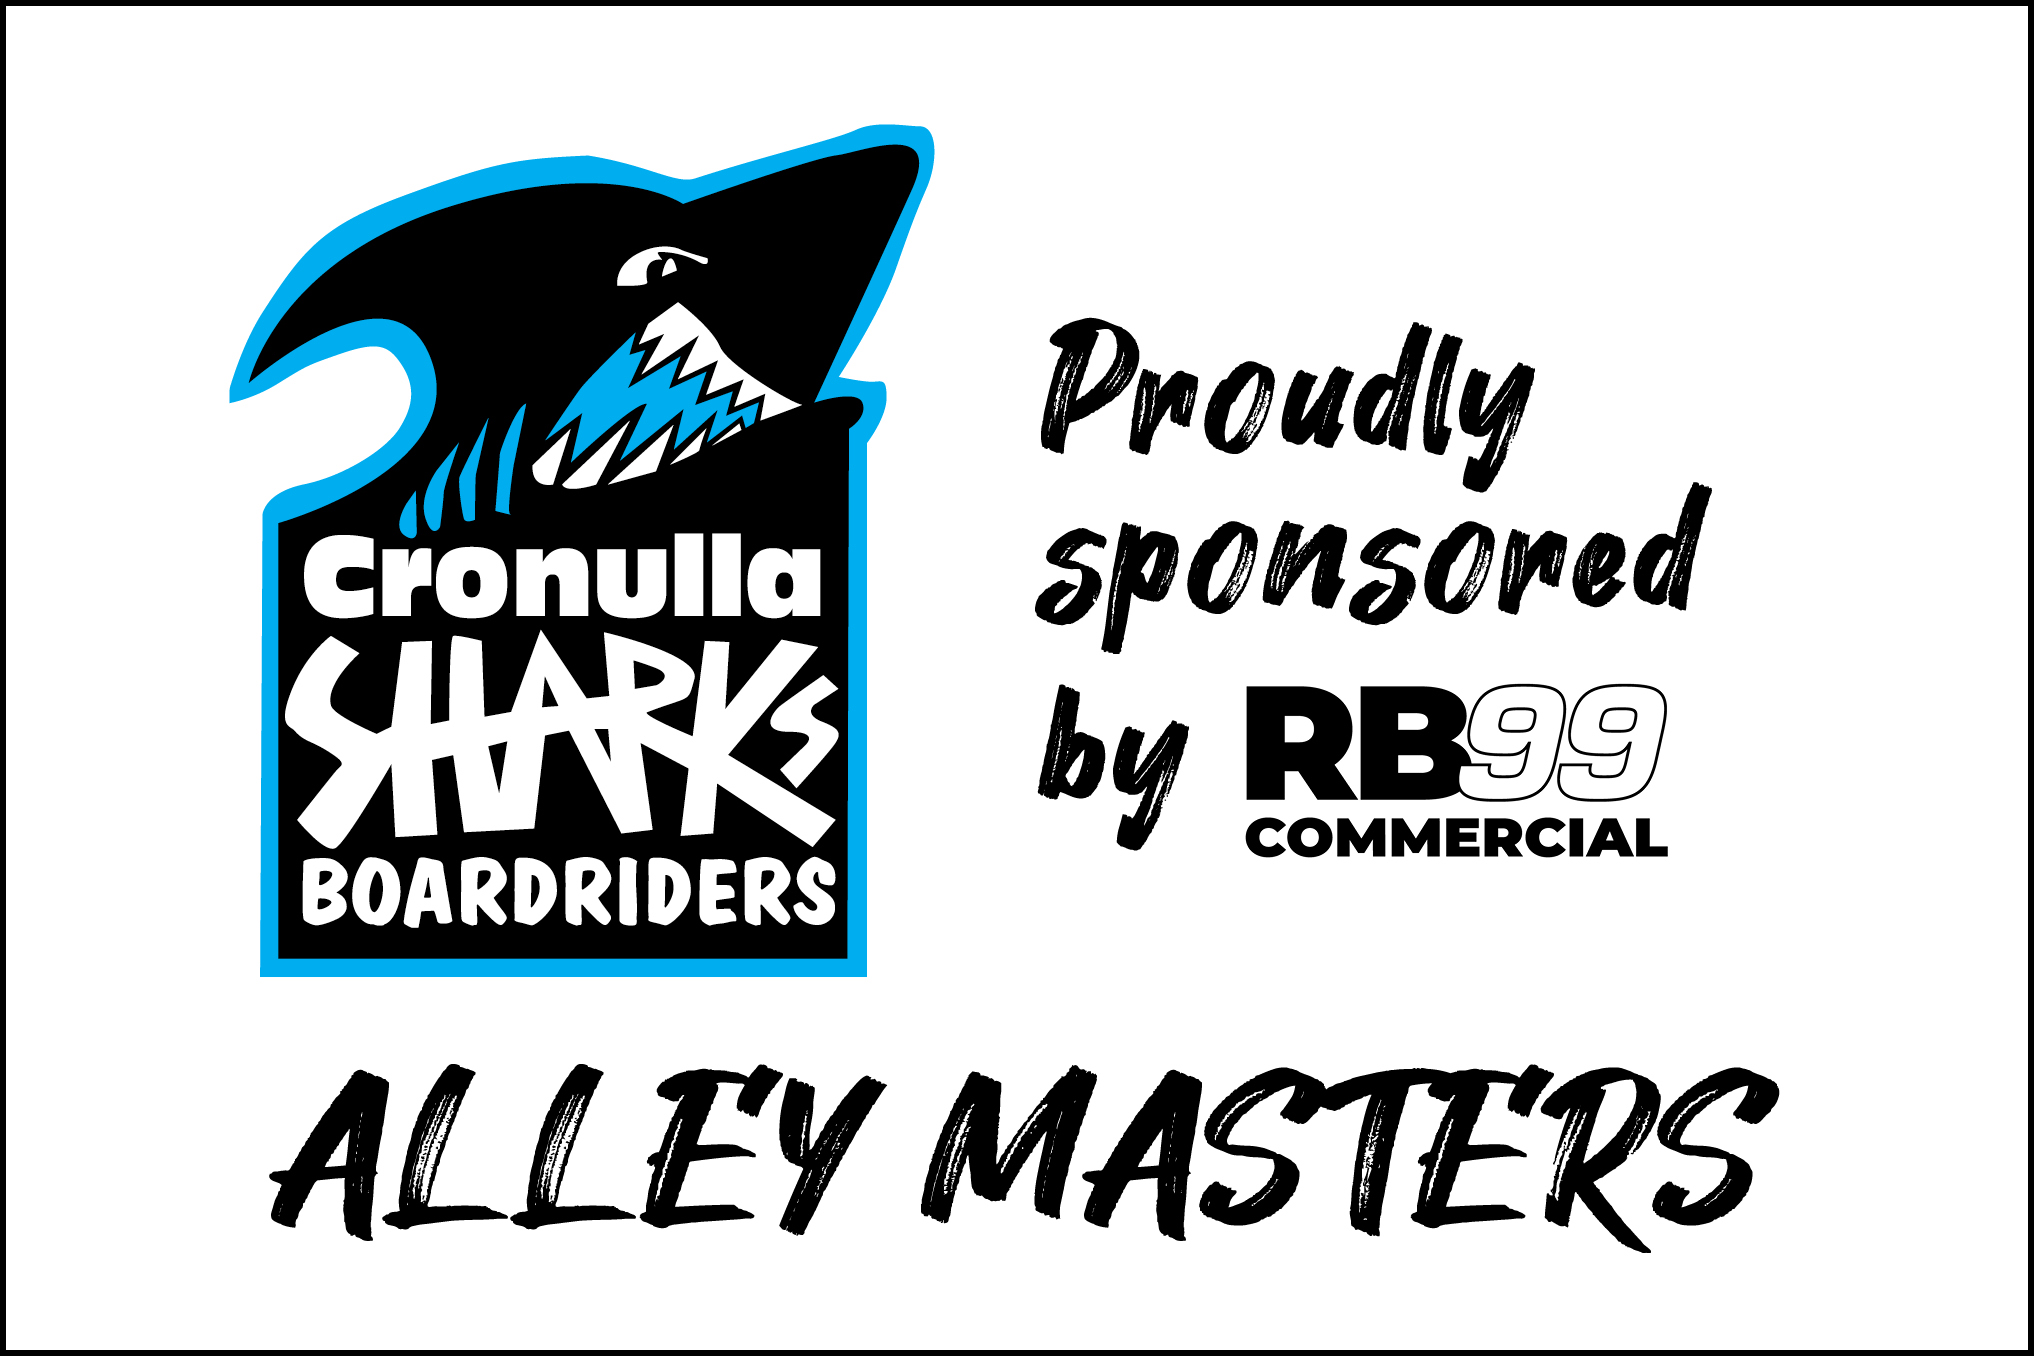 Cronulla Sharks Boardriders Alley Masters RB99